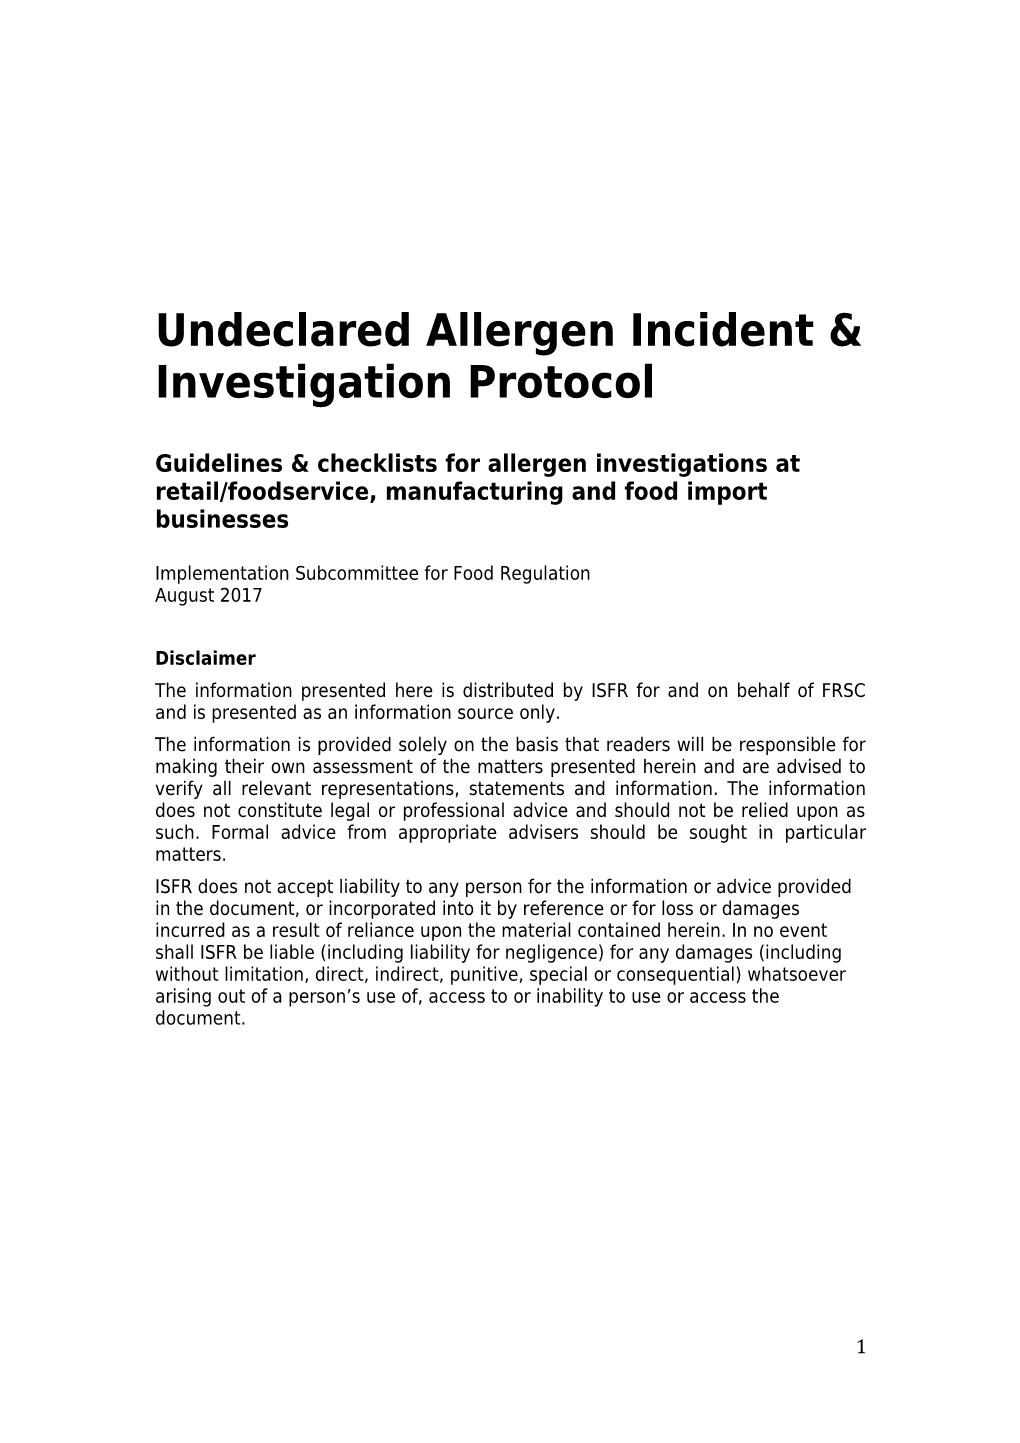 Undeclared Allergen Incident & Investigation Protocol